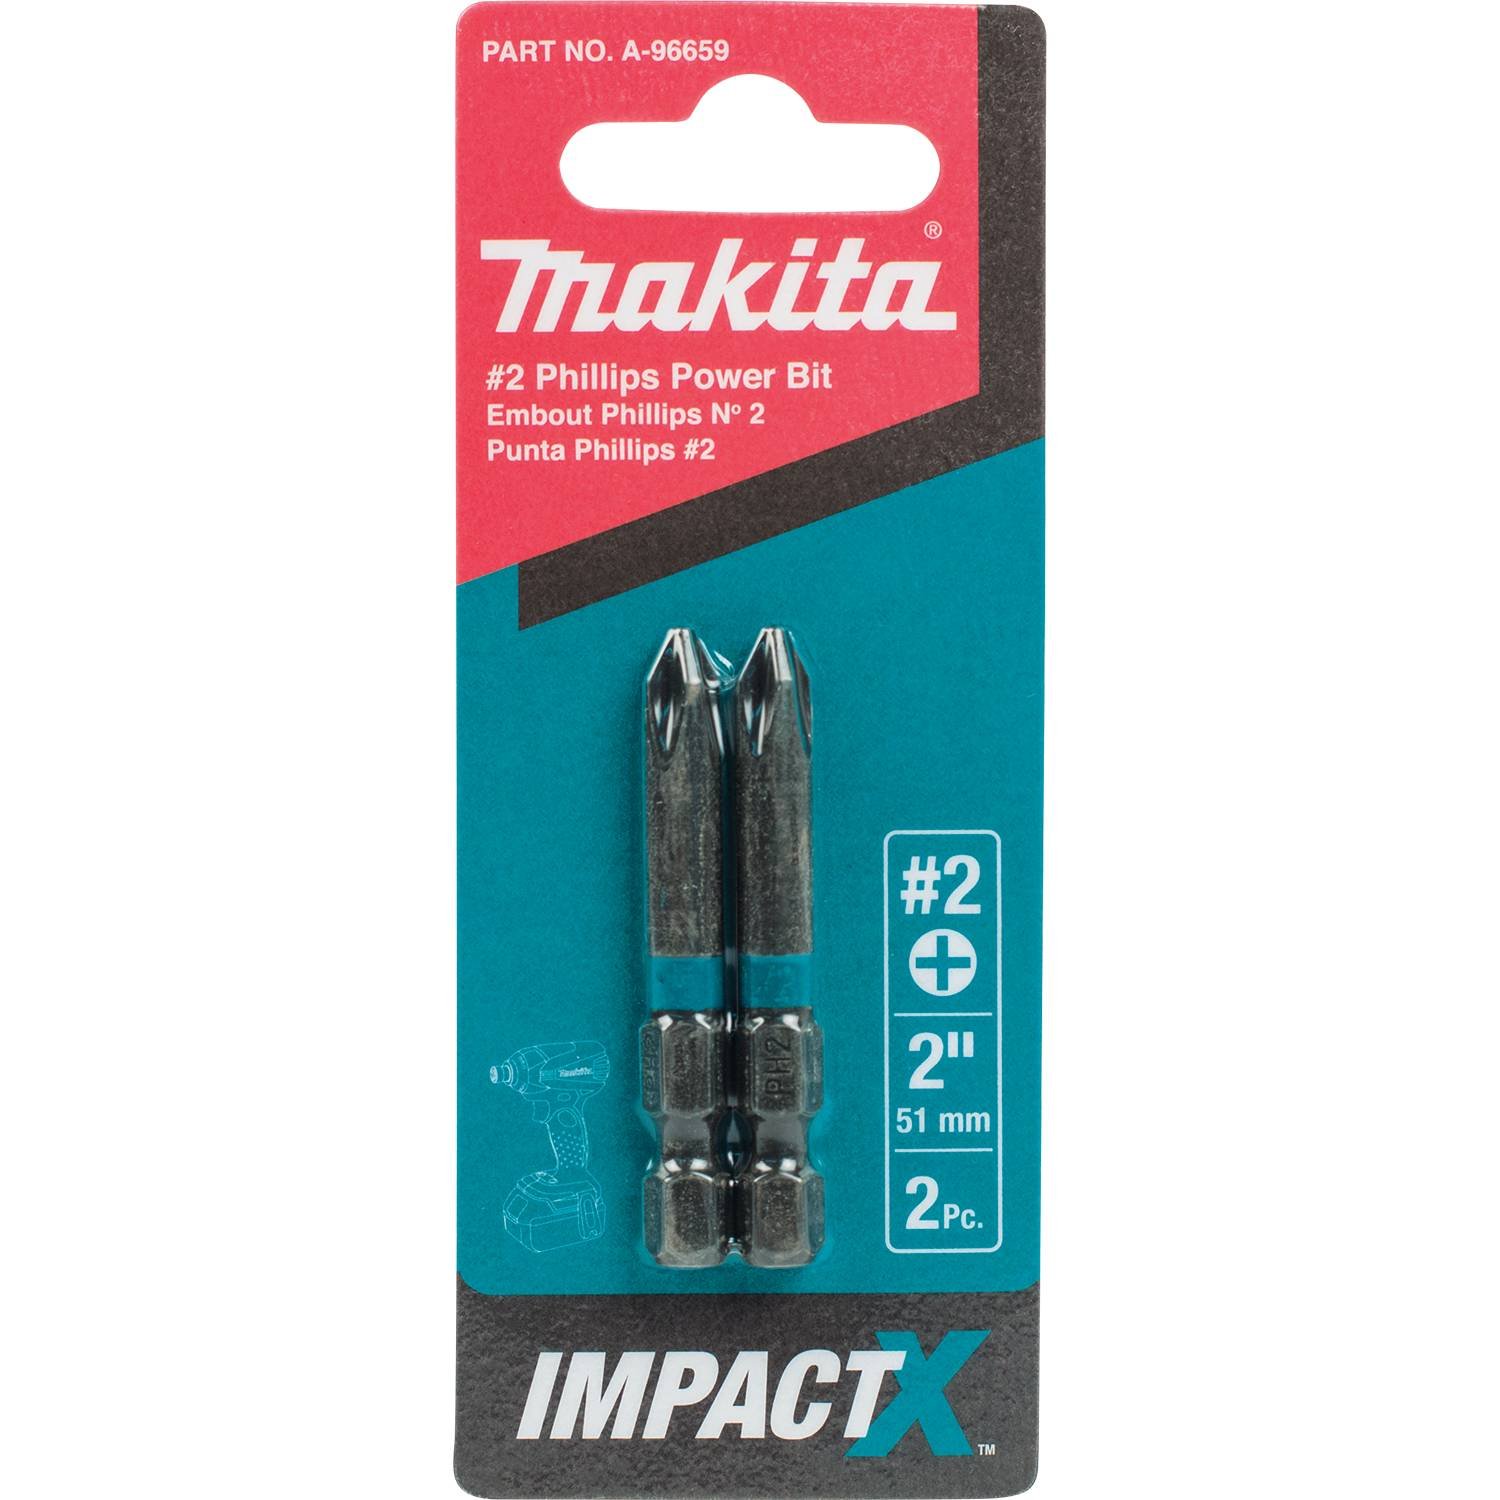 Makita A-96659 Impactx 2 Phillips 2″ Power Bit, 2 Pack